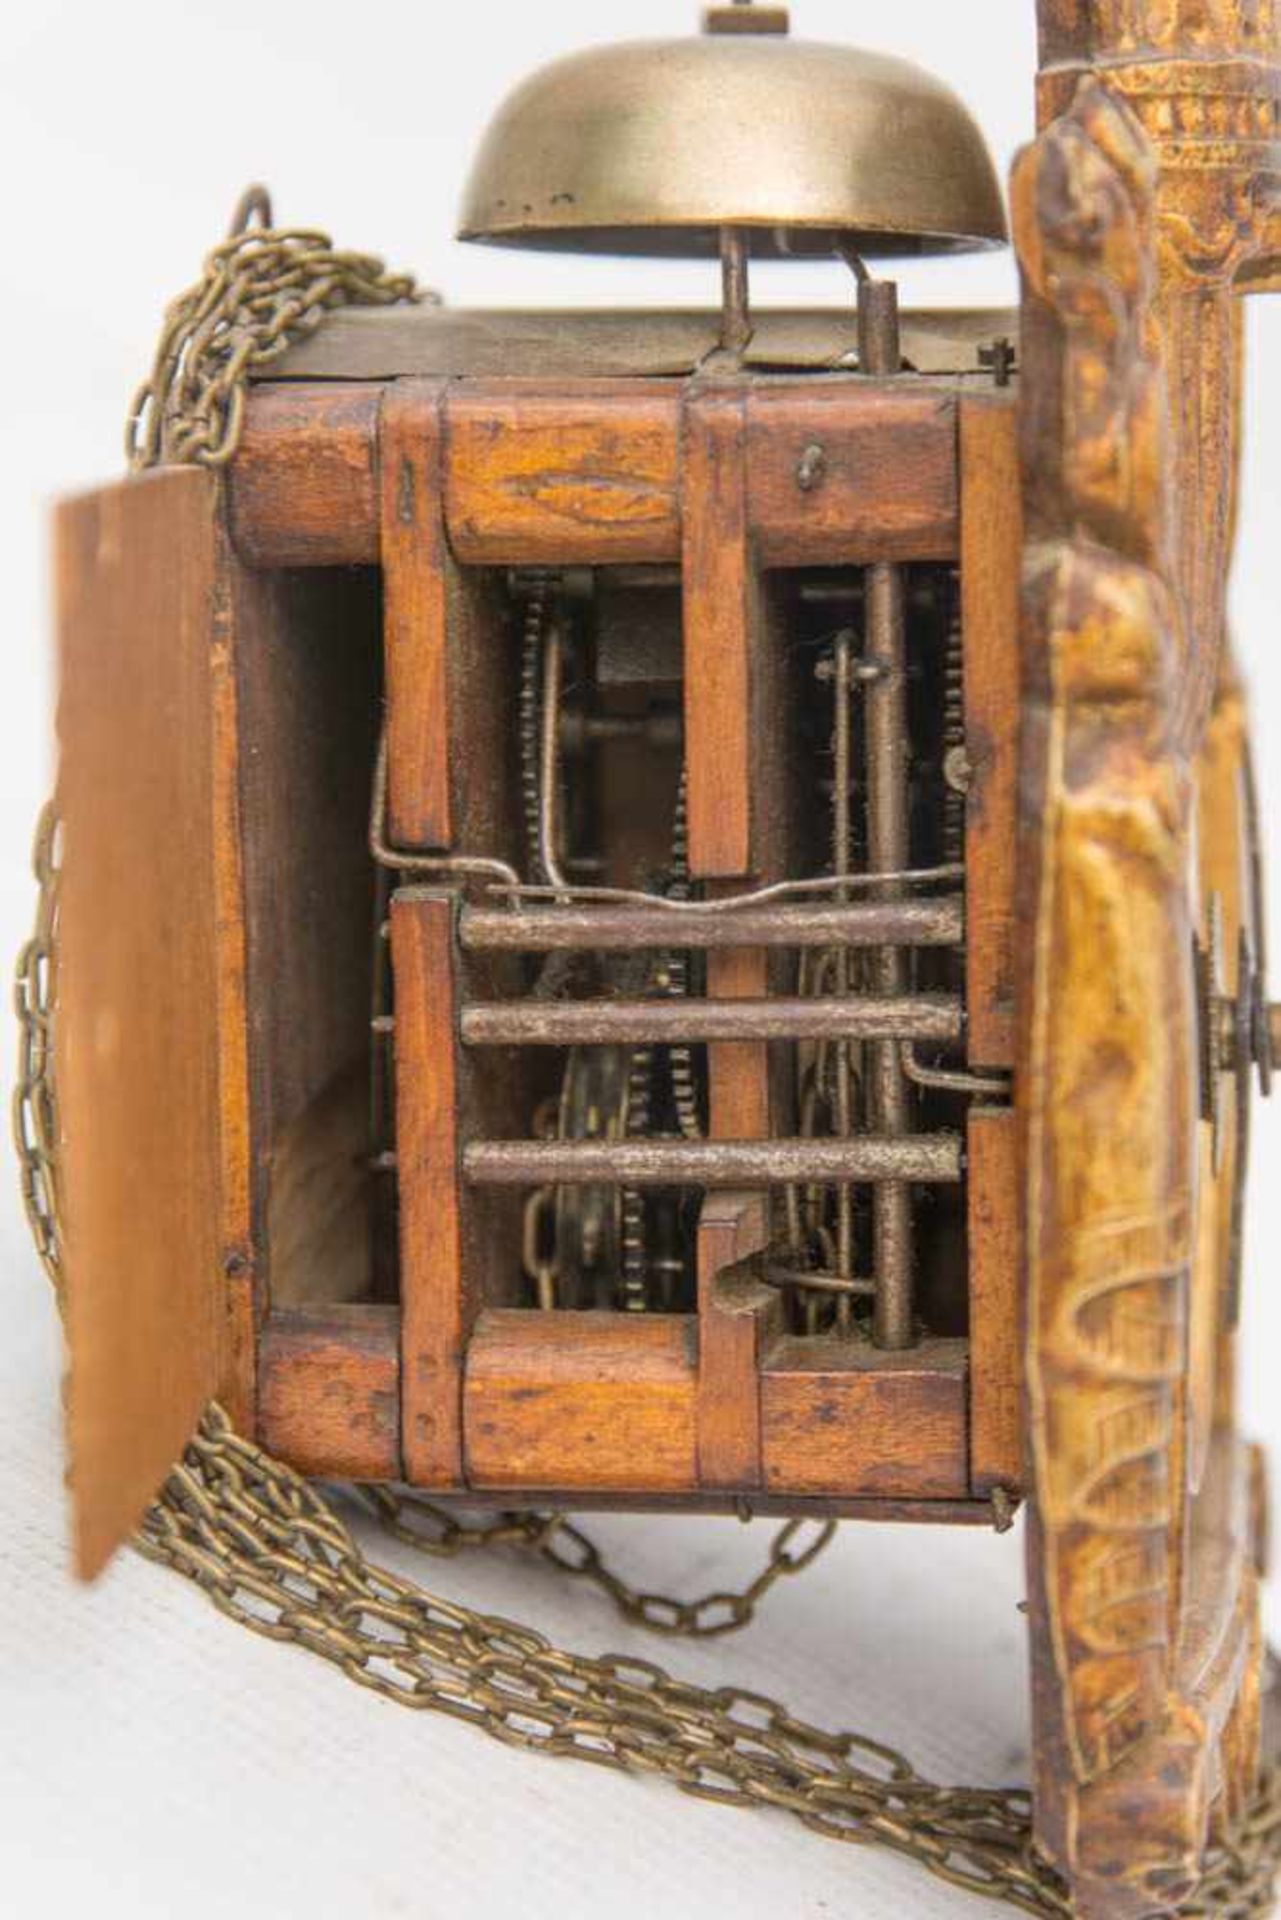 "JOCKELE" IM HISTORISMUS-STIL, Holz, Ende 19. JahrhundertKettenaufzug, Stunden- Glockenschlagwerk, - Image 3 of 3